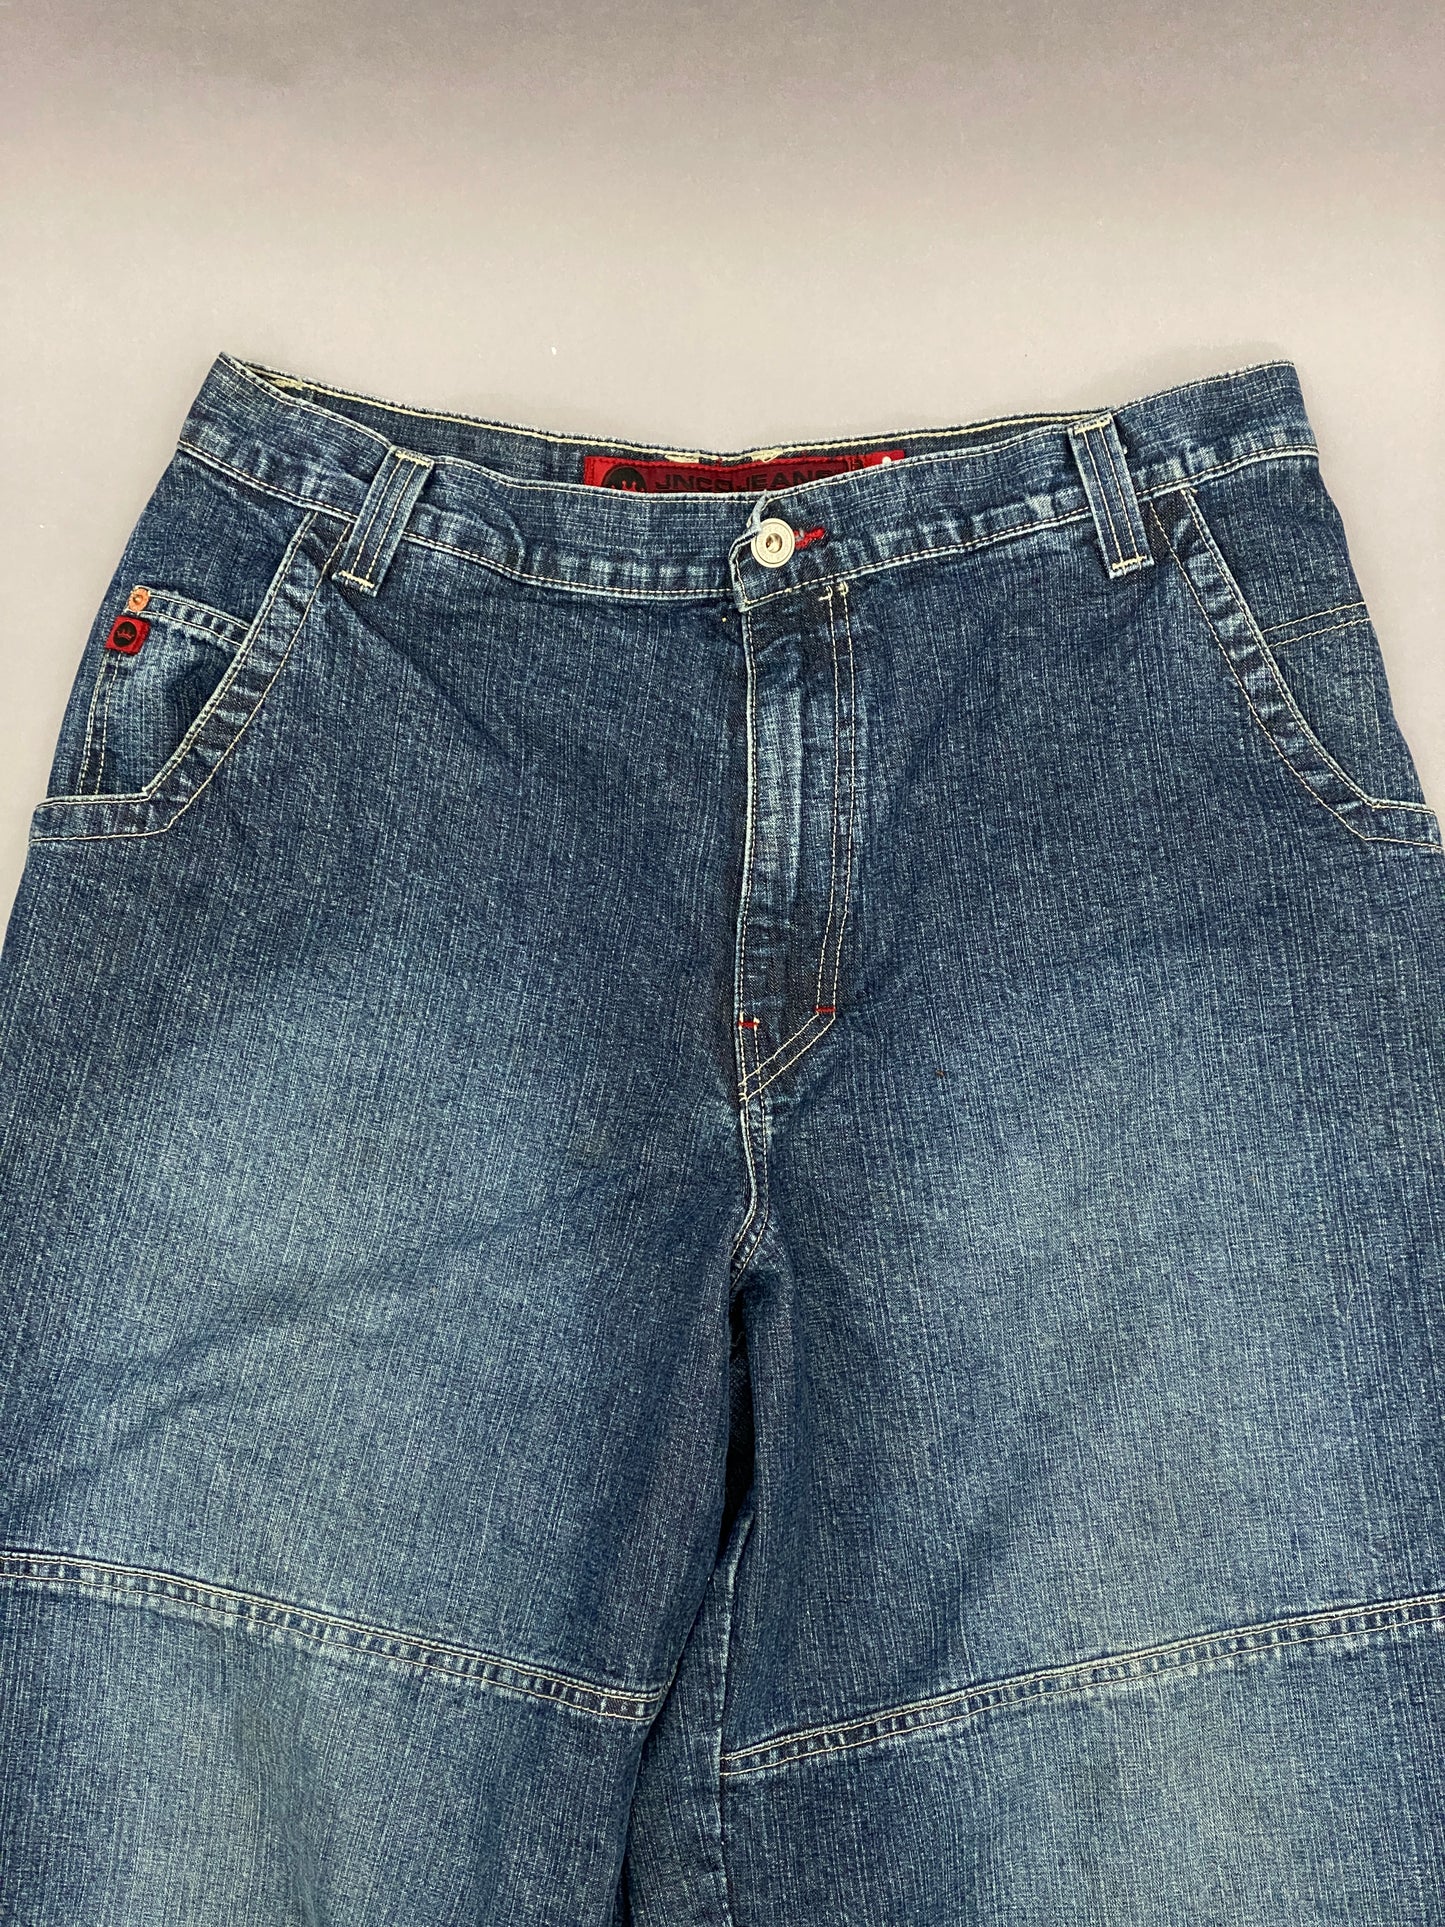 JNCO Carpenter Vintage Jeans - 36 x 32